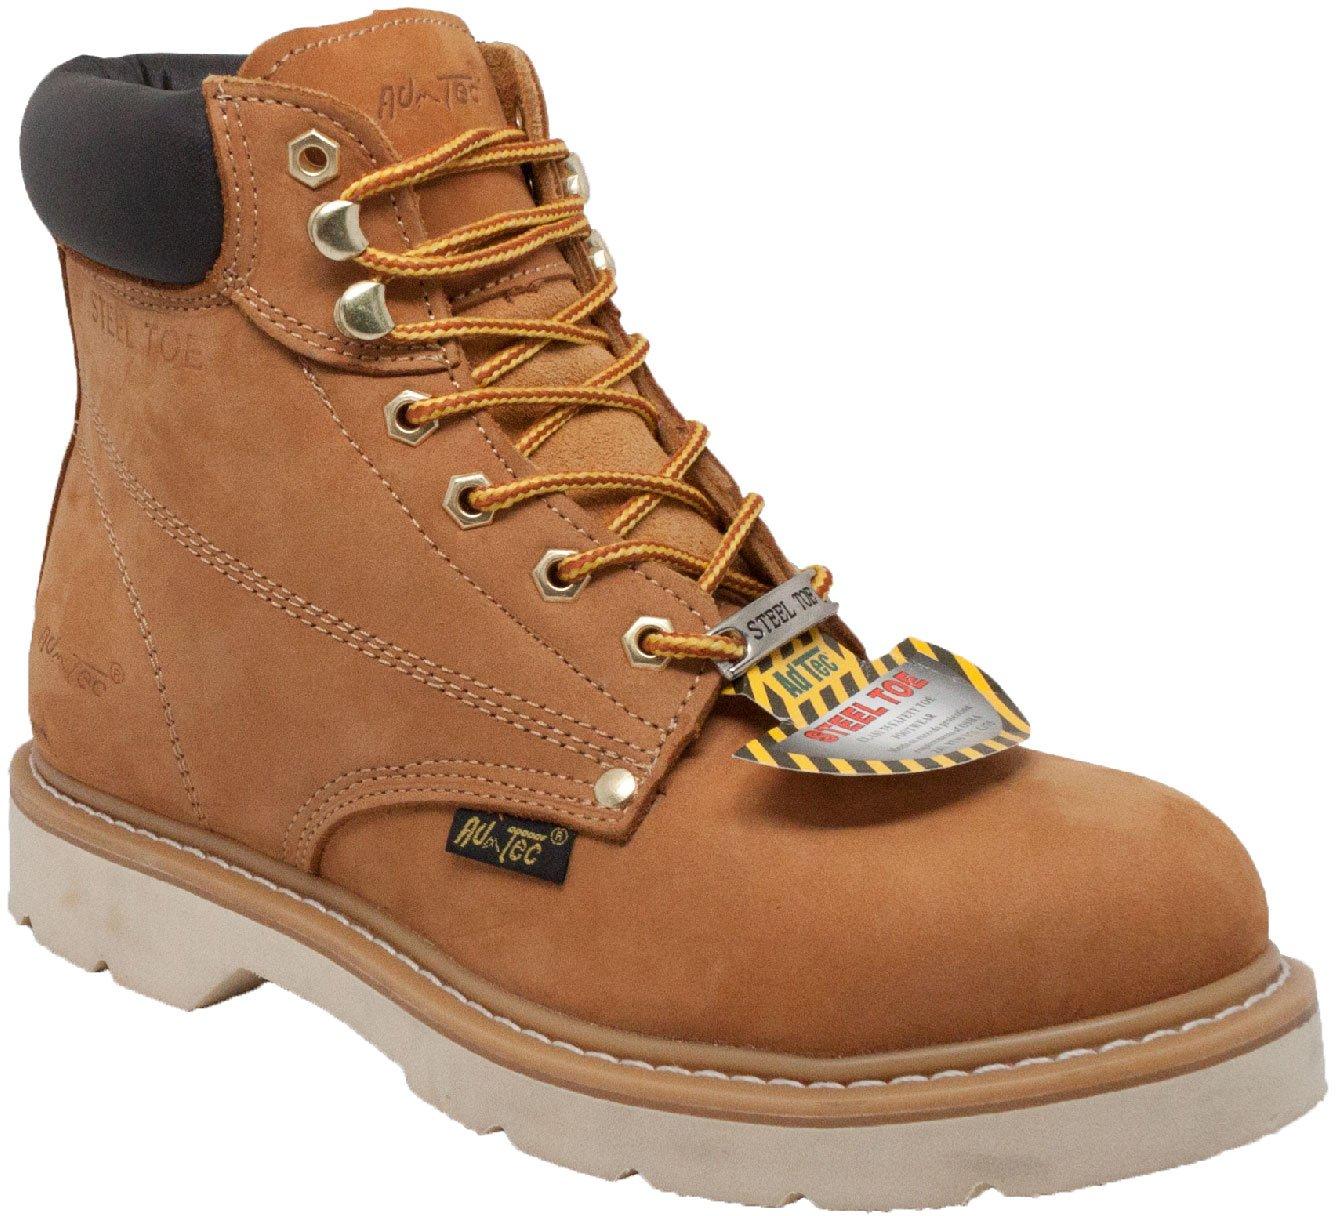 AdTec Mens 6'' Tan Steel Toe Work Boots